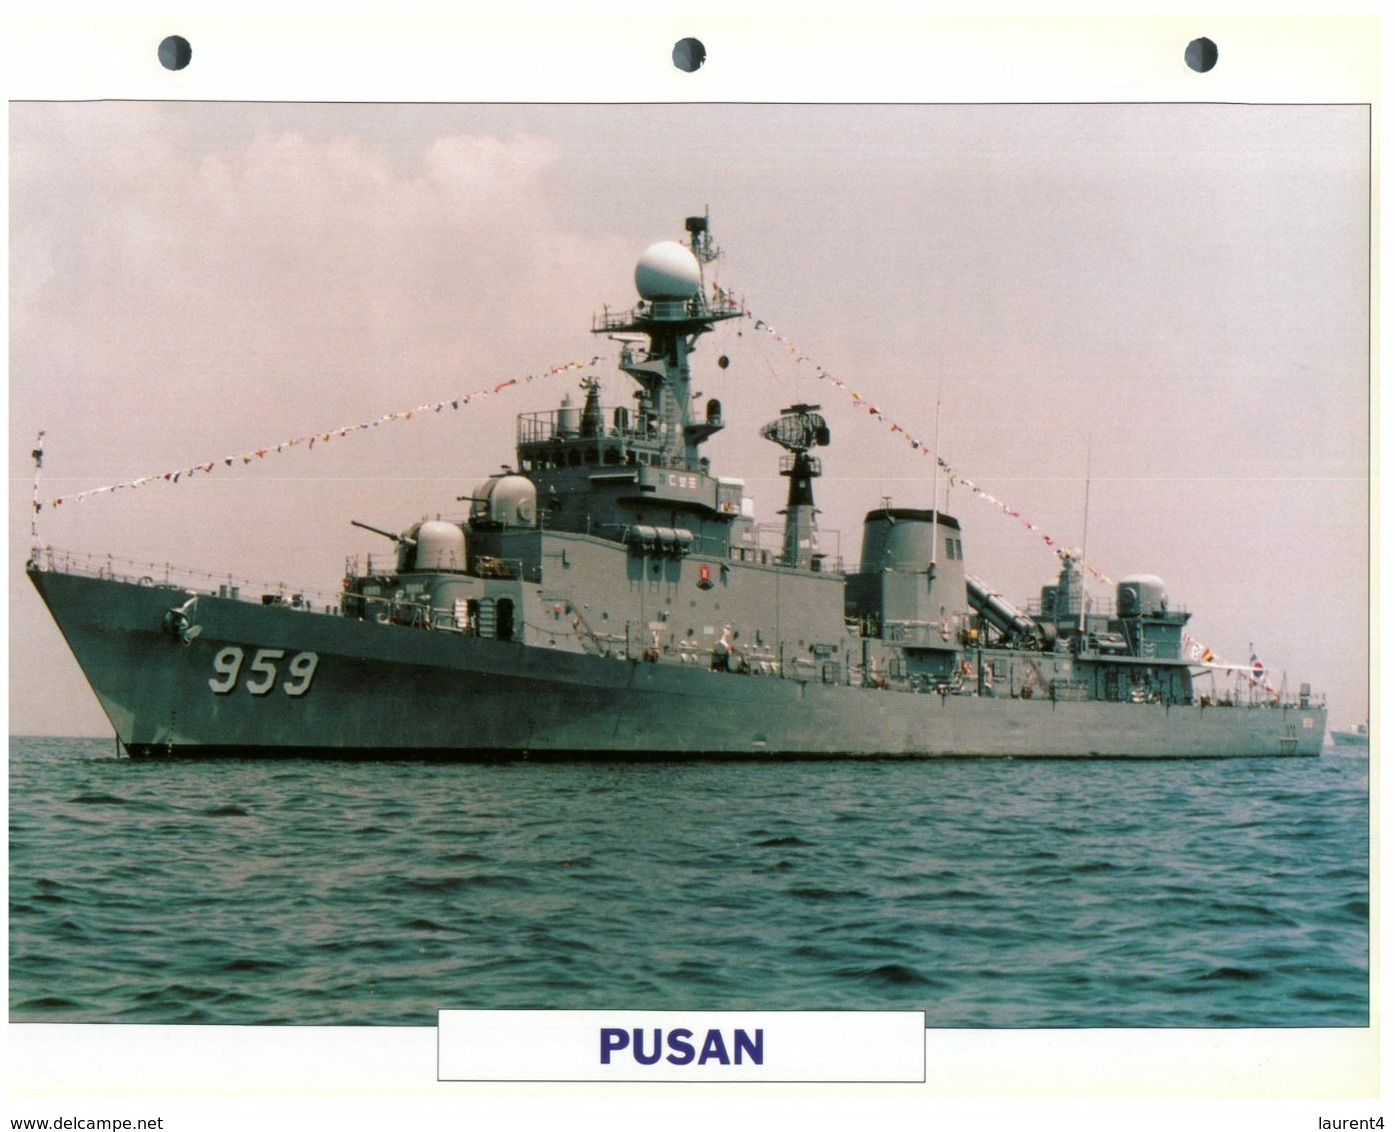 (25 X 19 Cm) (26-08-2020) - H - Photo And Info Sheet On Warship - Korean Navy - Pusan (959) - Bateaux